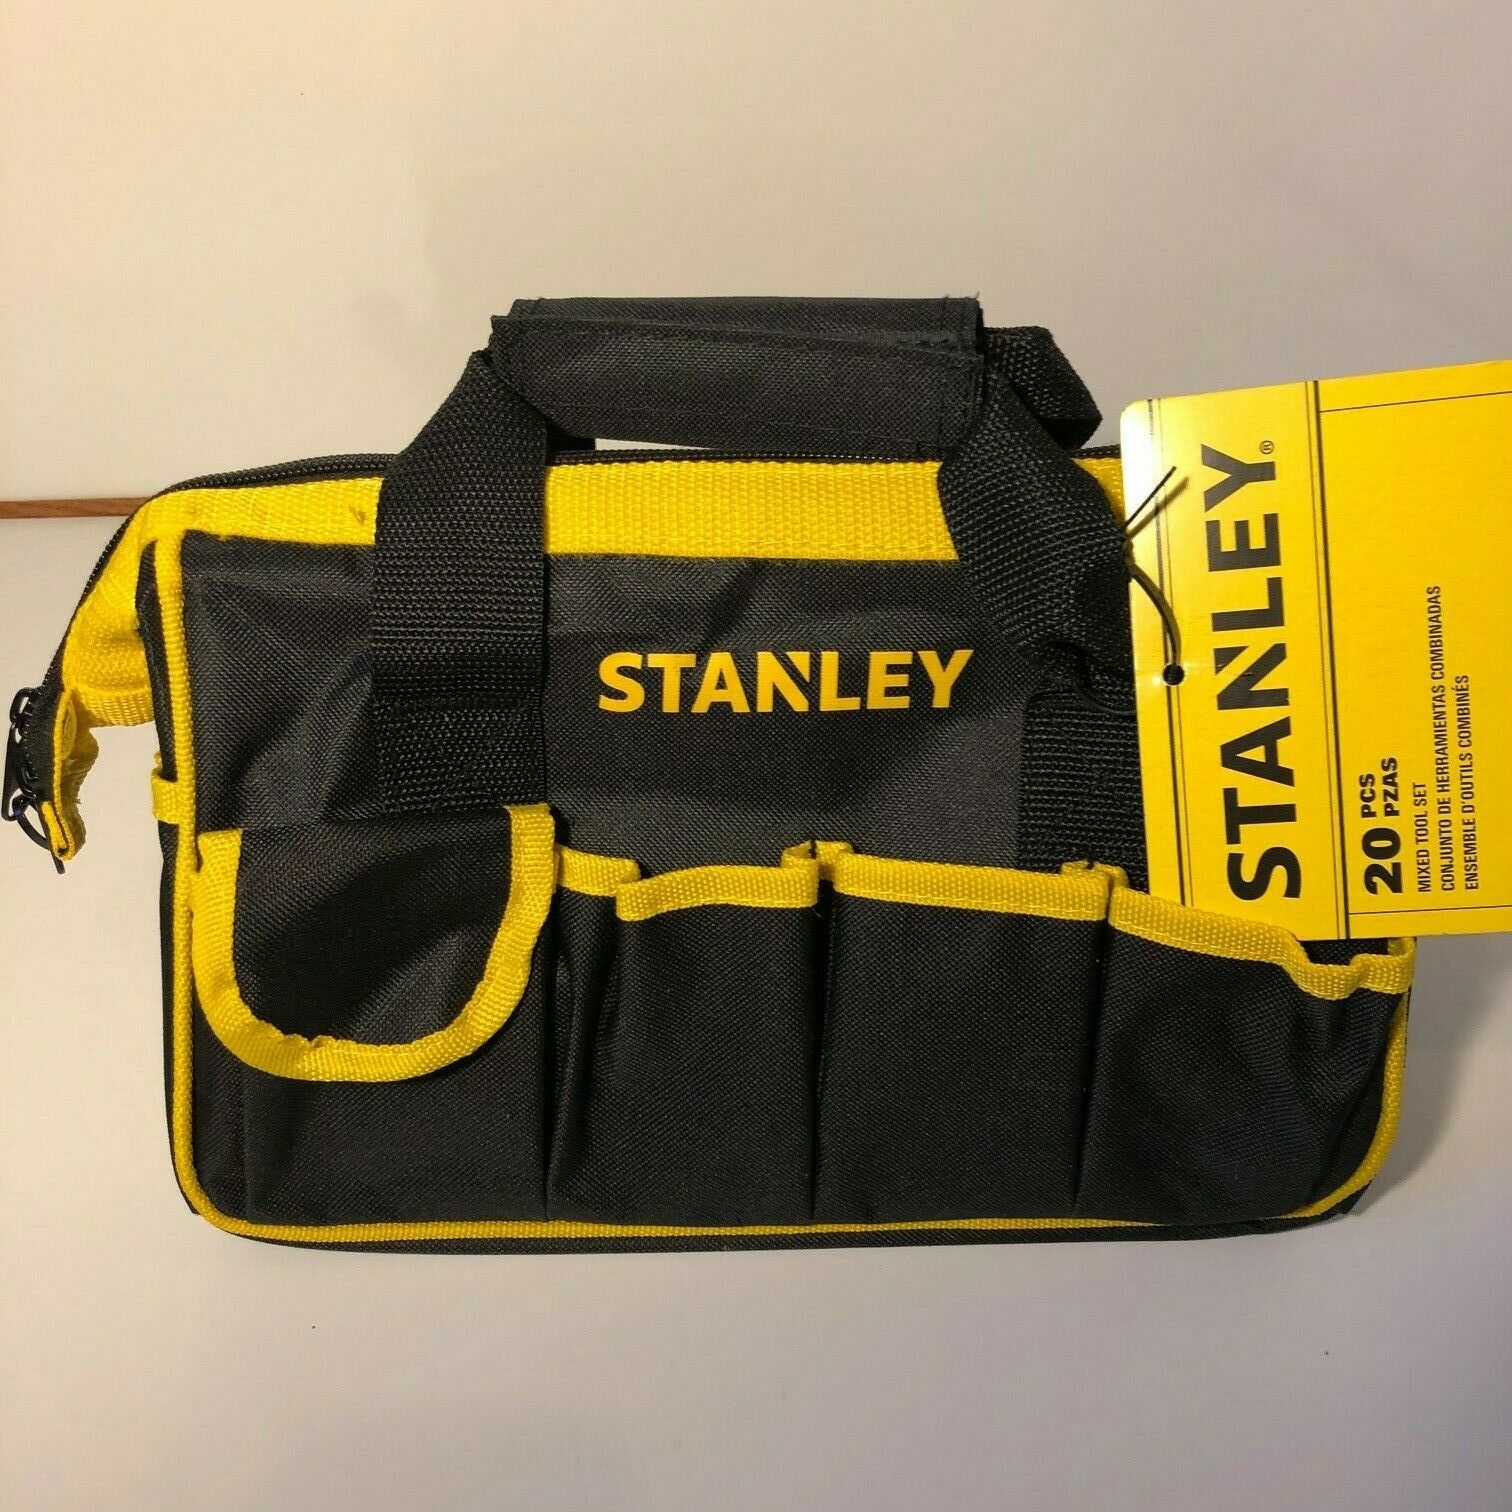 Stanley STHT6125 38 pc Screwdriver Set